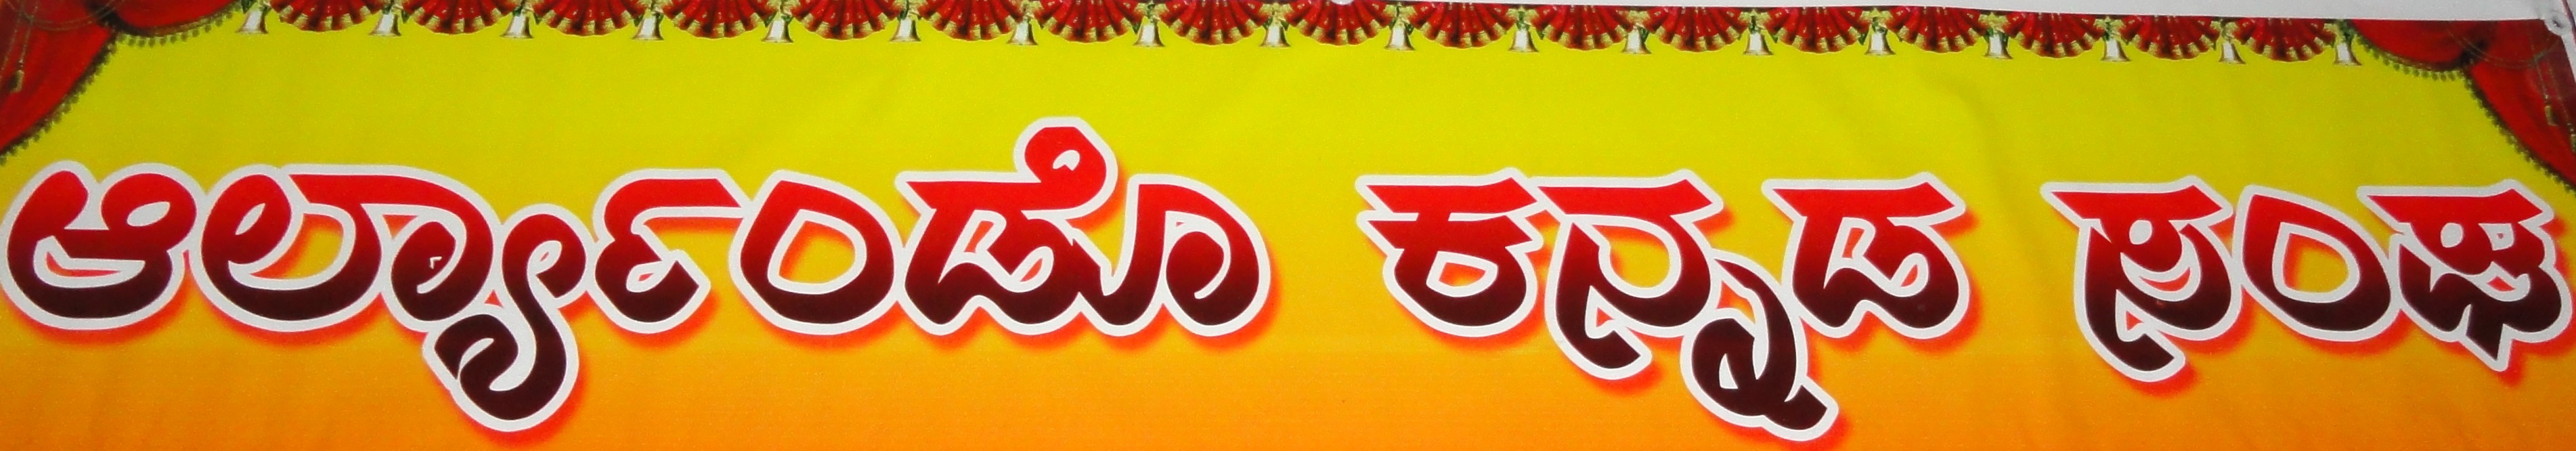 Kannada Kali Summary Of Class 6 10 17 2014 Kannada Kali